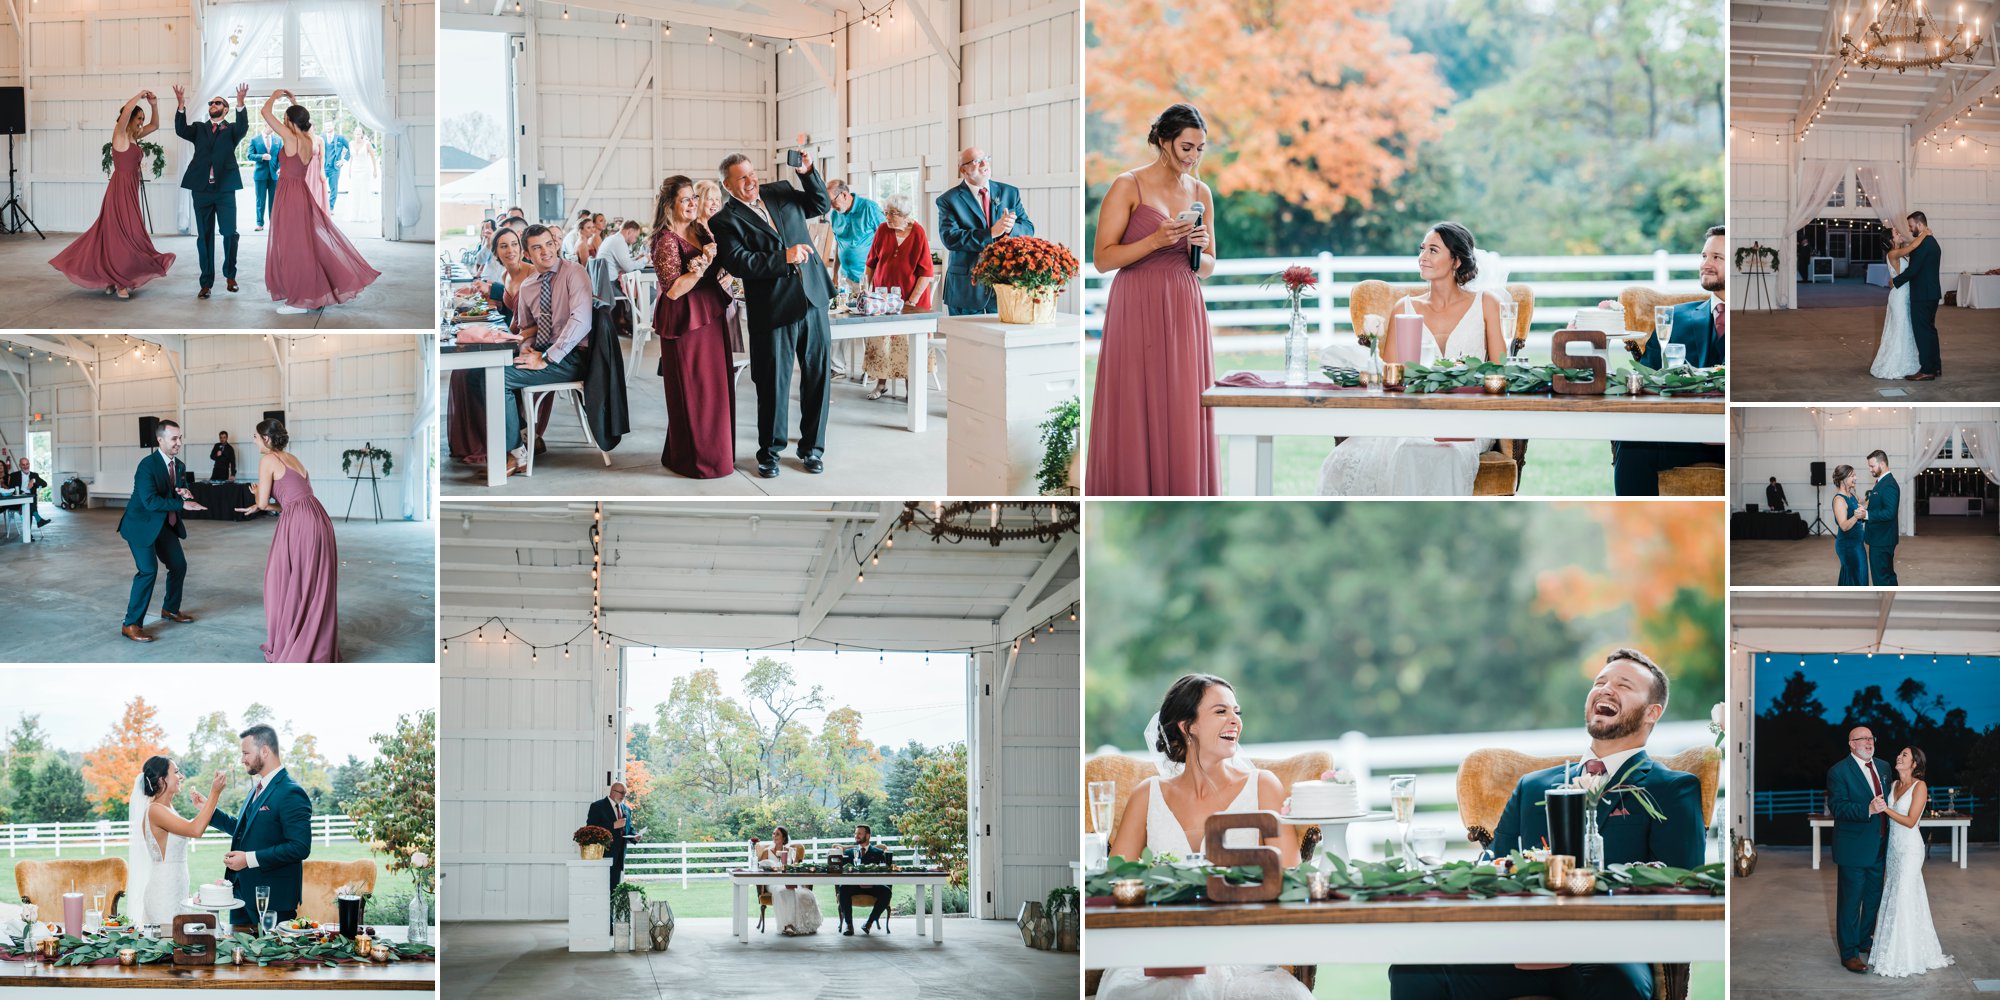 Alum Creek Farm Wedding Reception in Delaware, Ohio